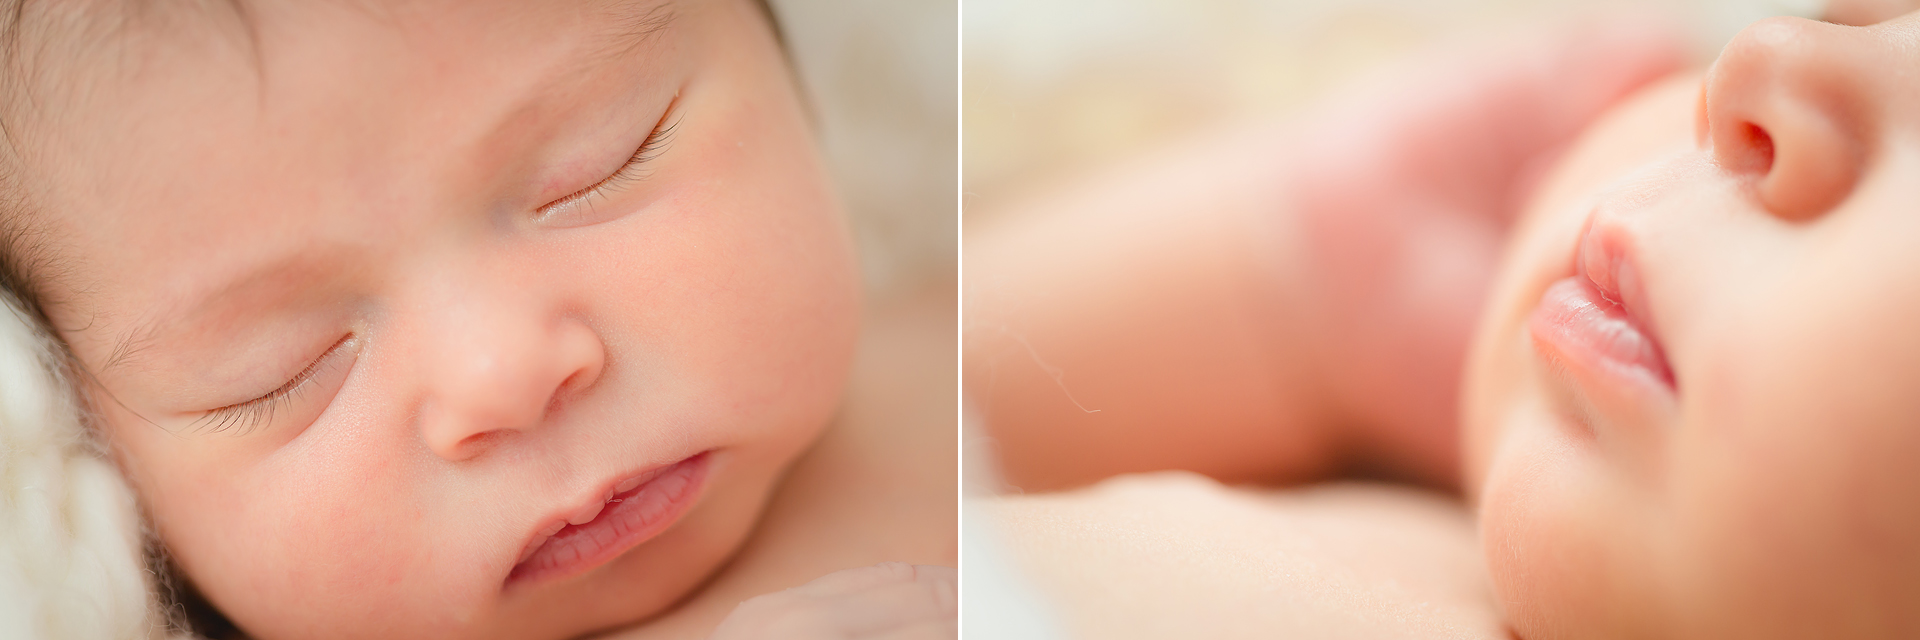 Lifestyle newborn session - Tonya Teran Photography - rockville, MD newborn baby and family photographer